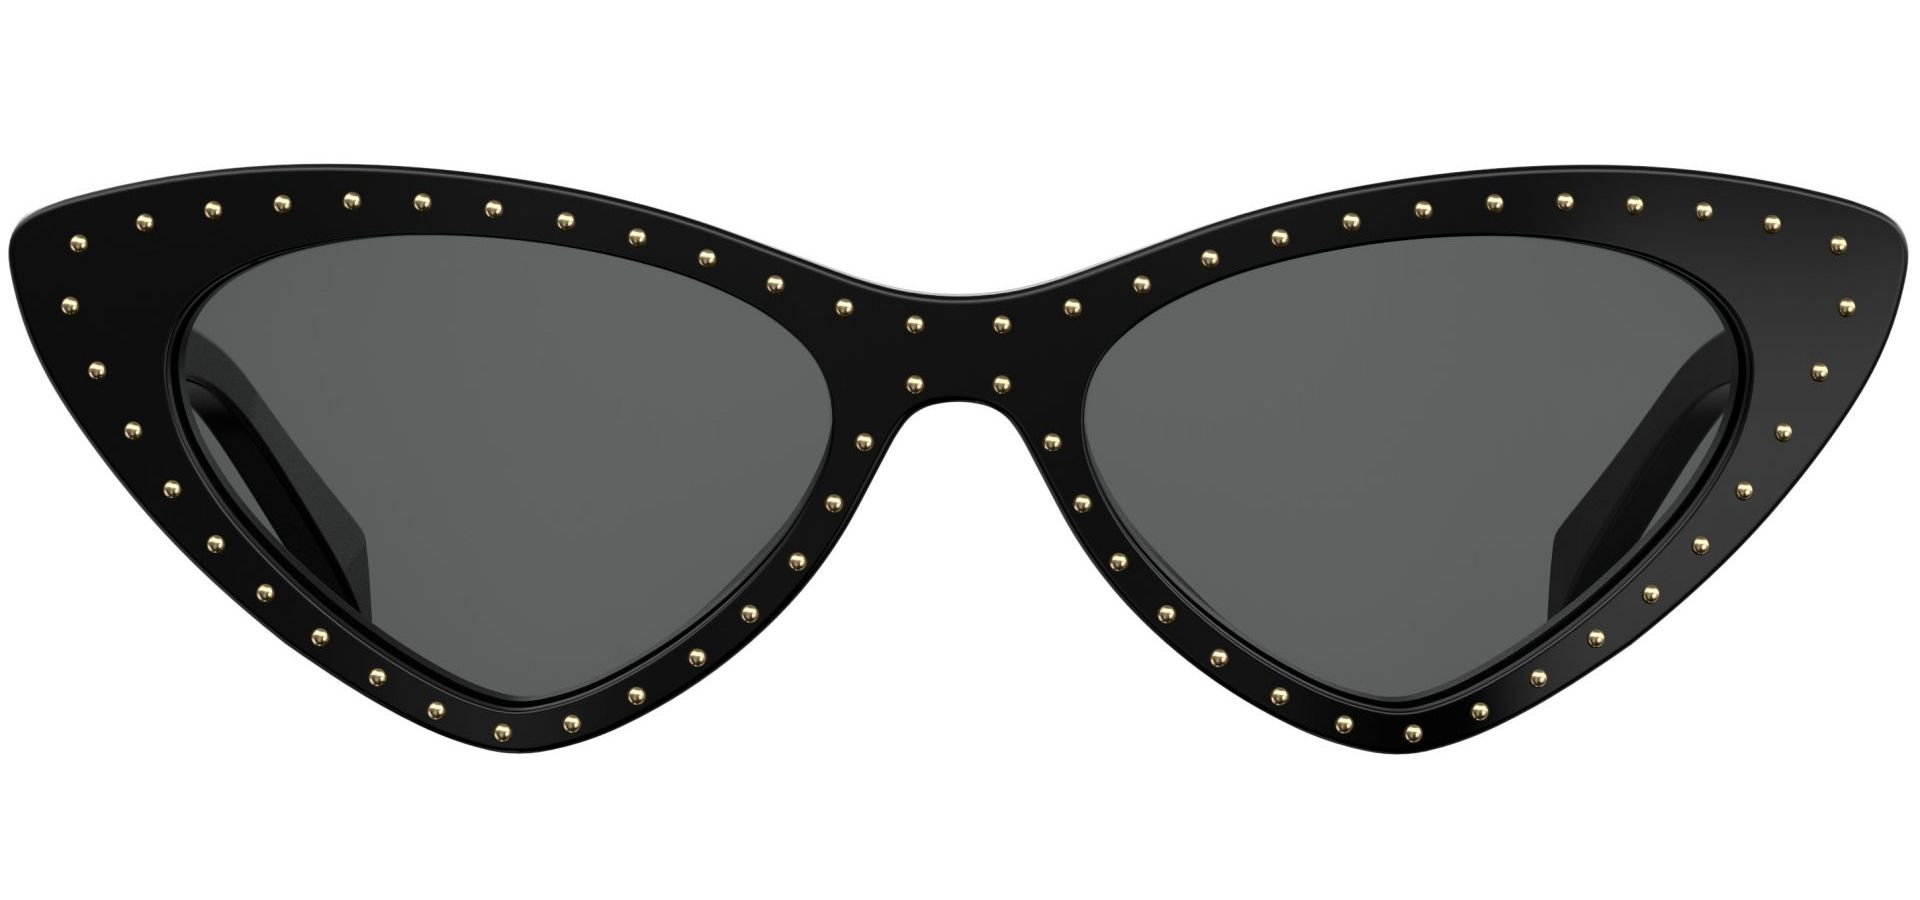 Sunčane naočale Moschino MOS006/S.: Boja: Black w/ bids, Veličina: 52-17-140, Spol: ženske, Materijal: acetat